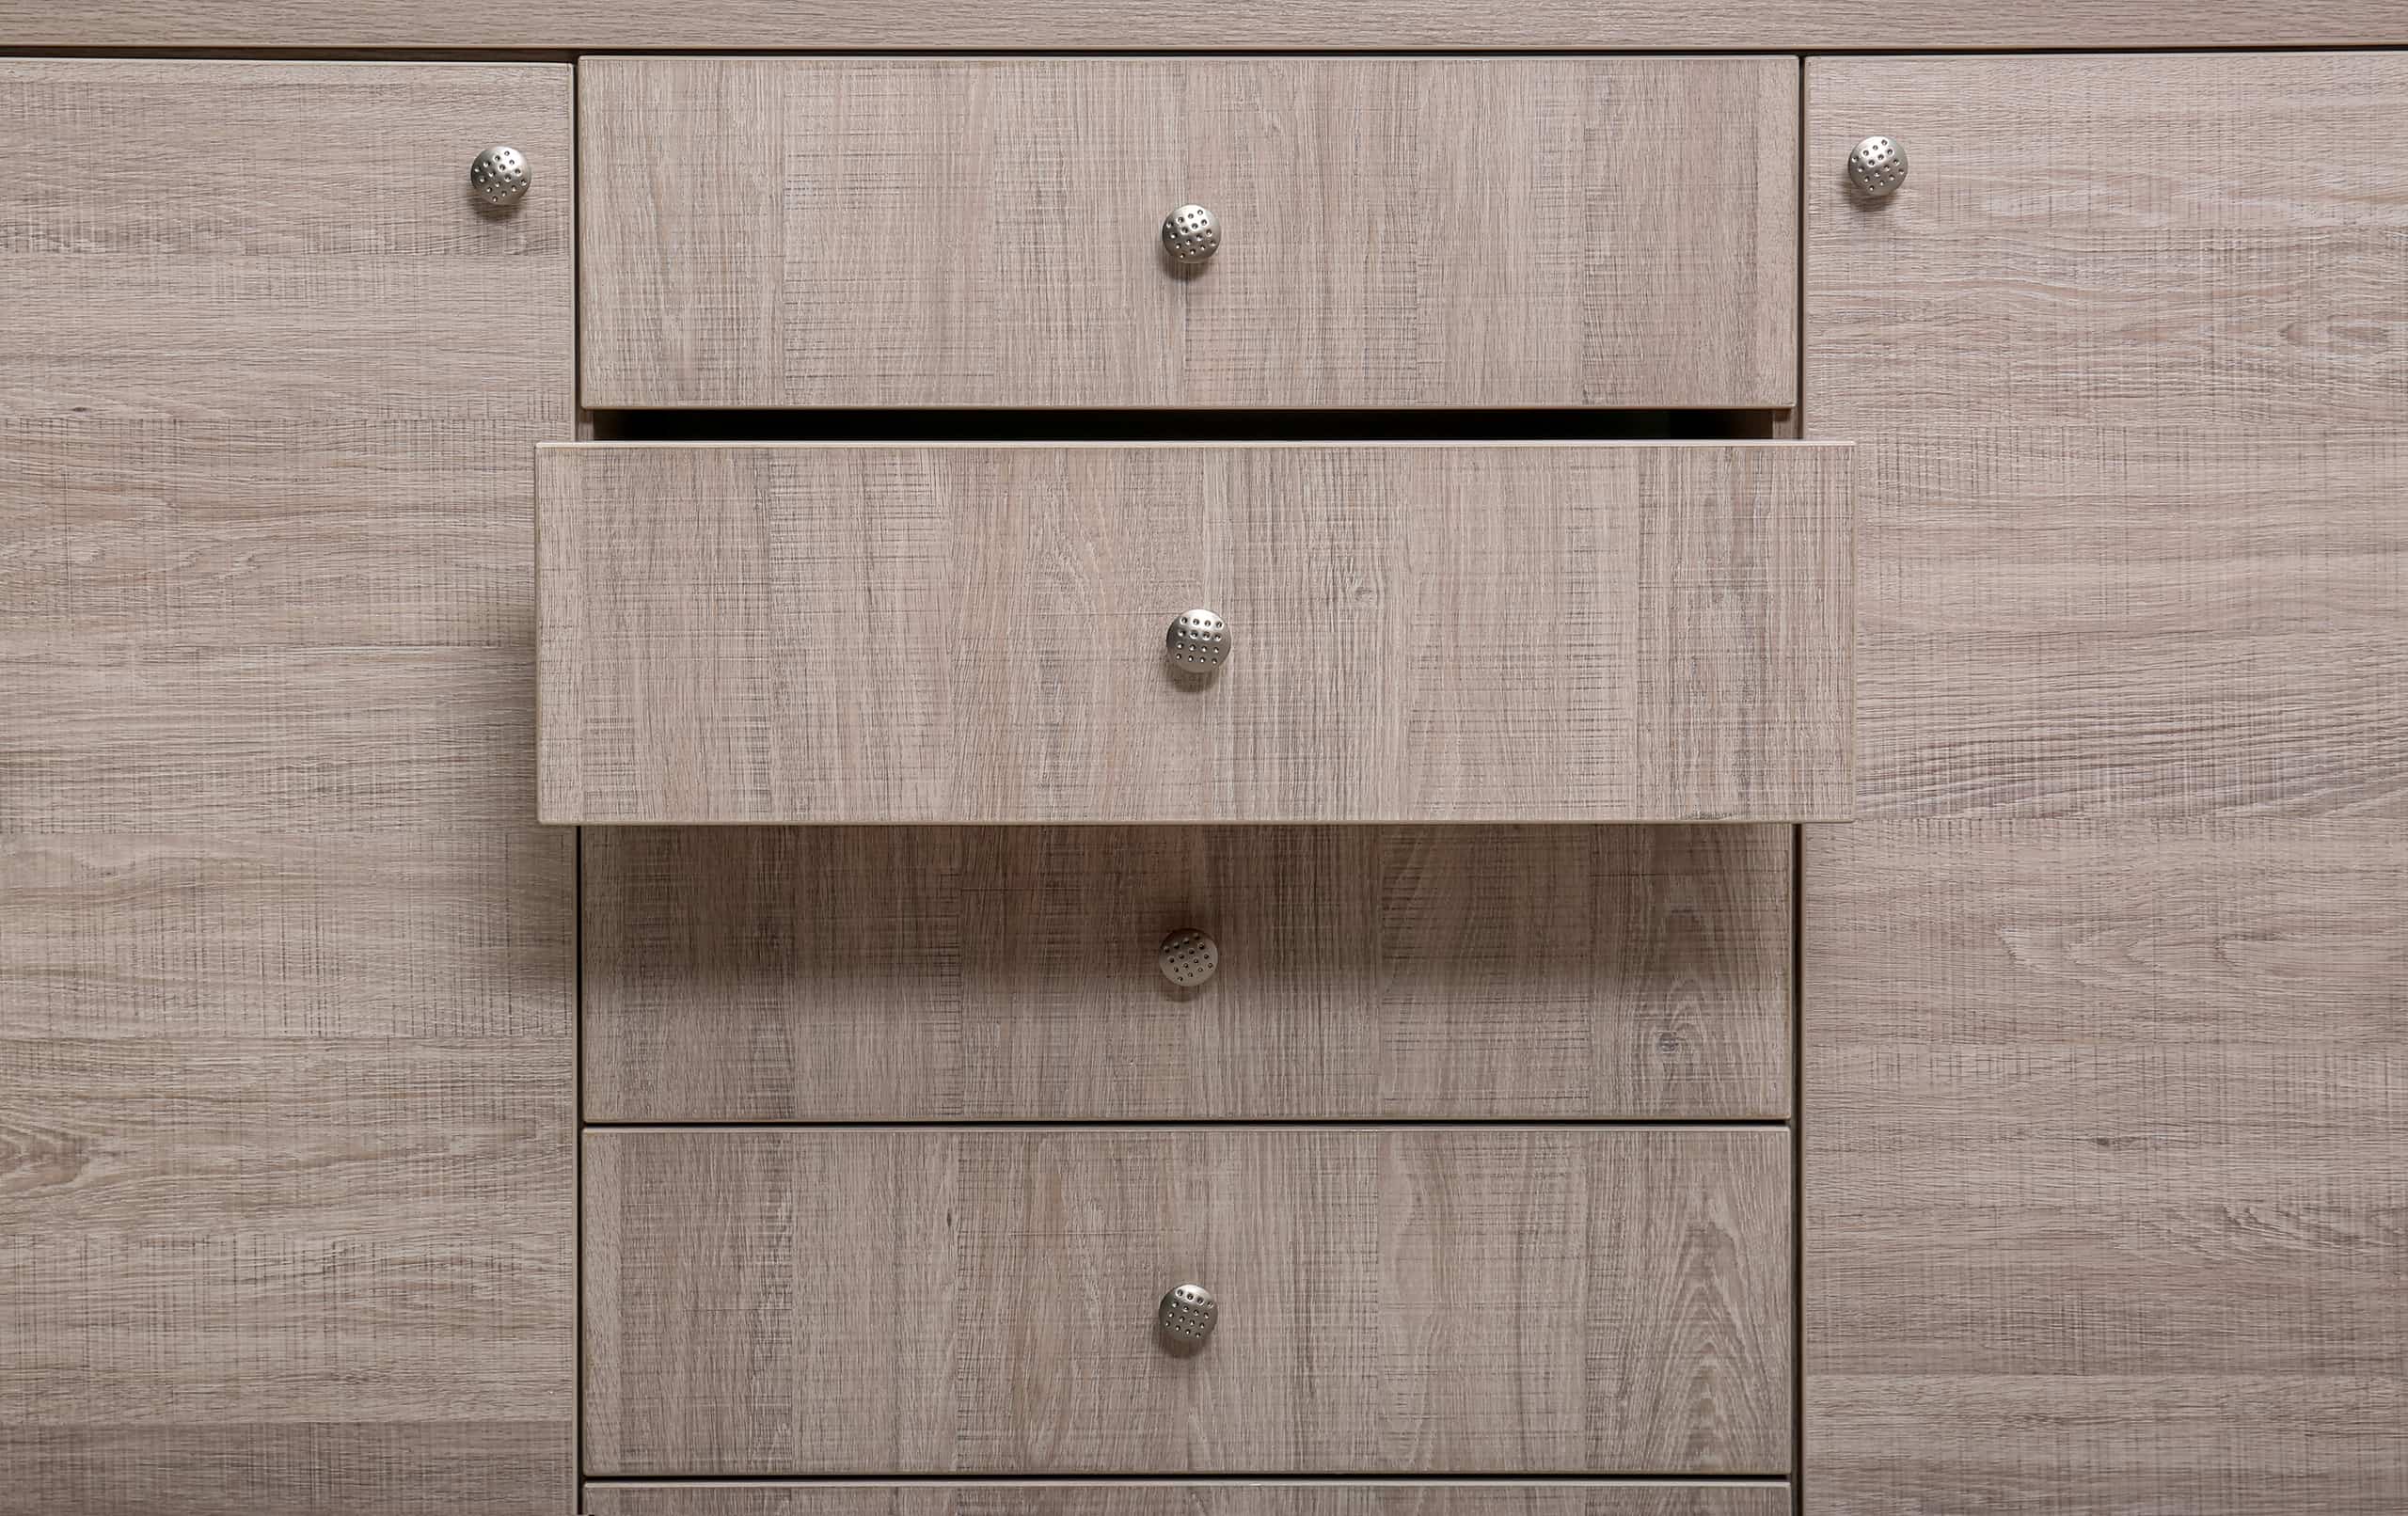 MroMax Wood Pull Knobs 96mm Hole Distance 125mm Length Cabinet Furniture Kitchen Pulls Handles for Dresser Drawer Wardrobe 10Pcs